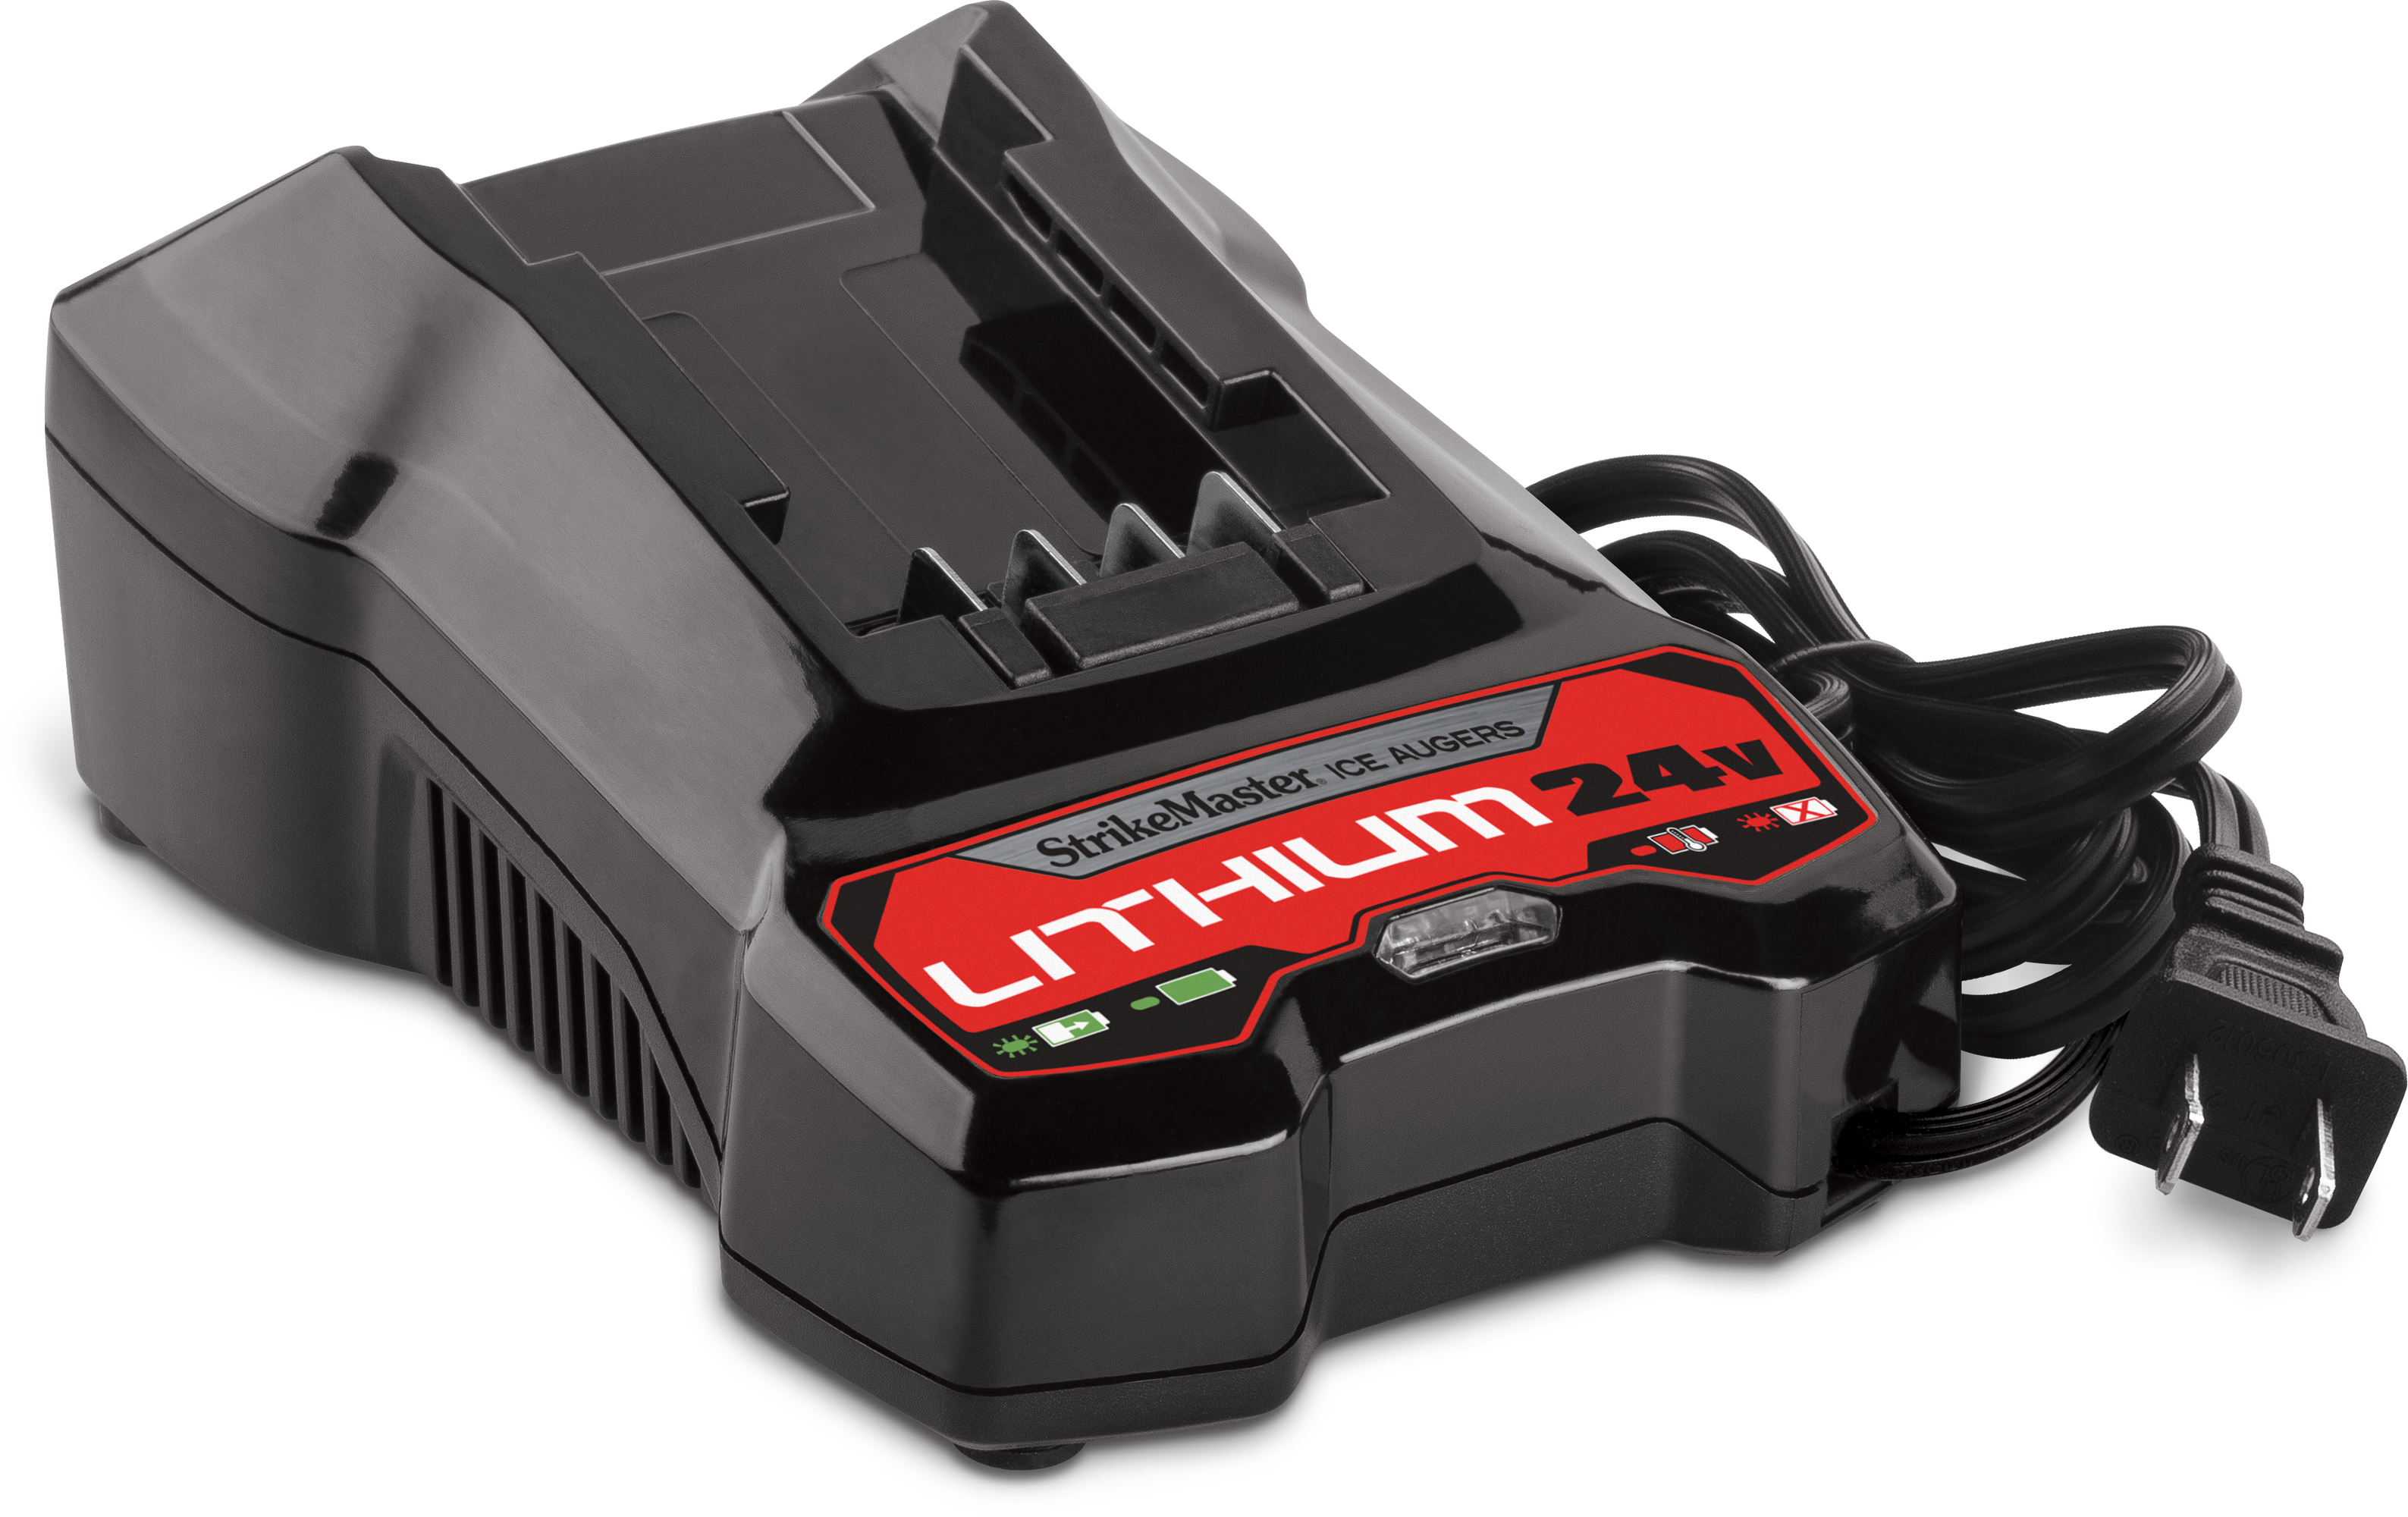 Strikemaster LTV-CB Lithium 24 Volt 2 Amp Rapid Charging, Charger